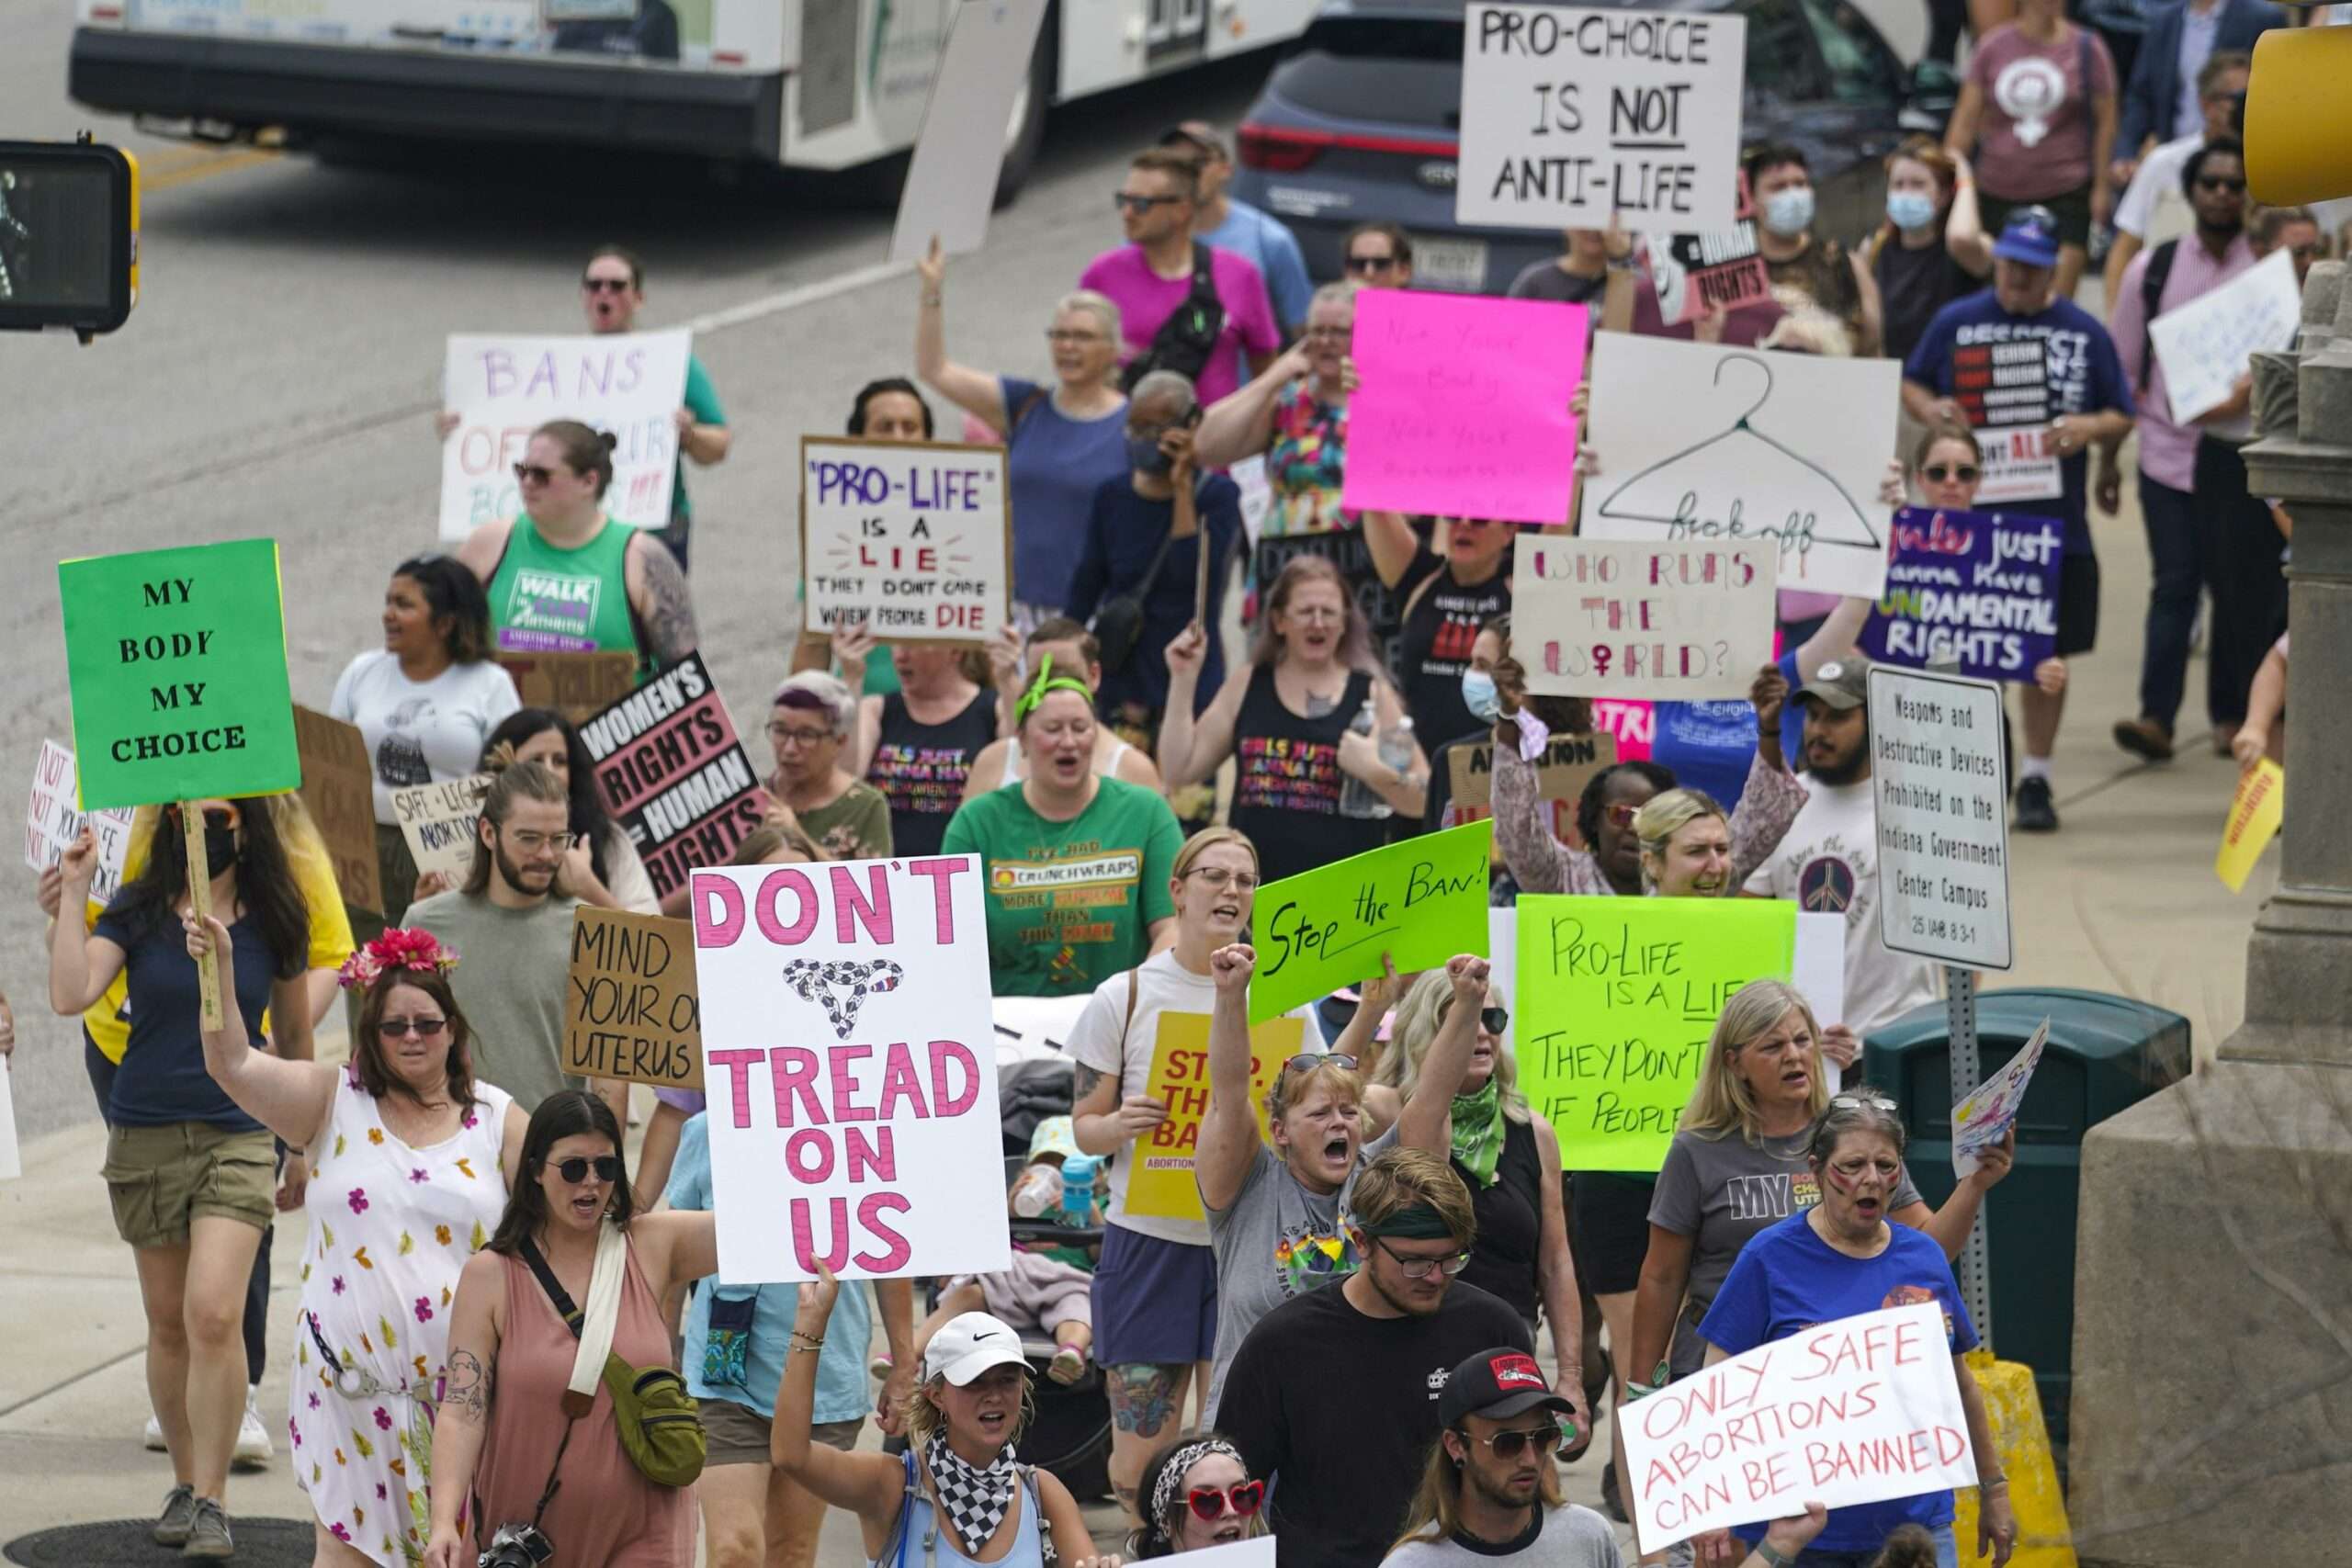 Organization will resume funding abortions in Kentucky